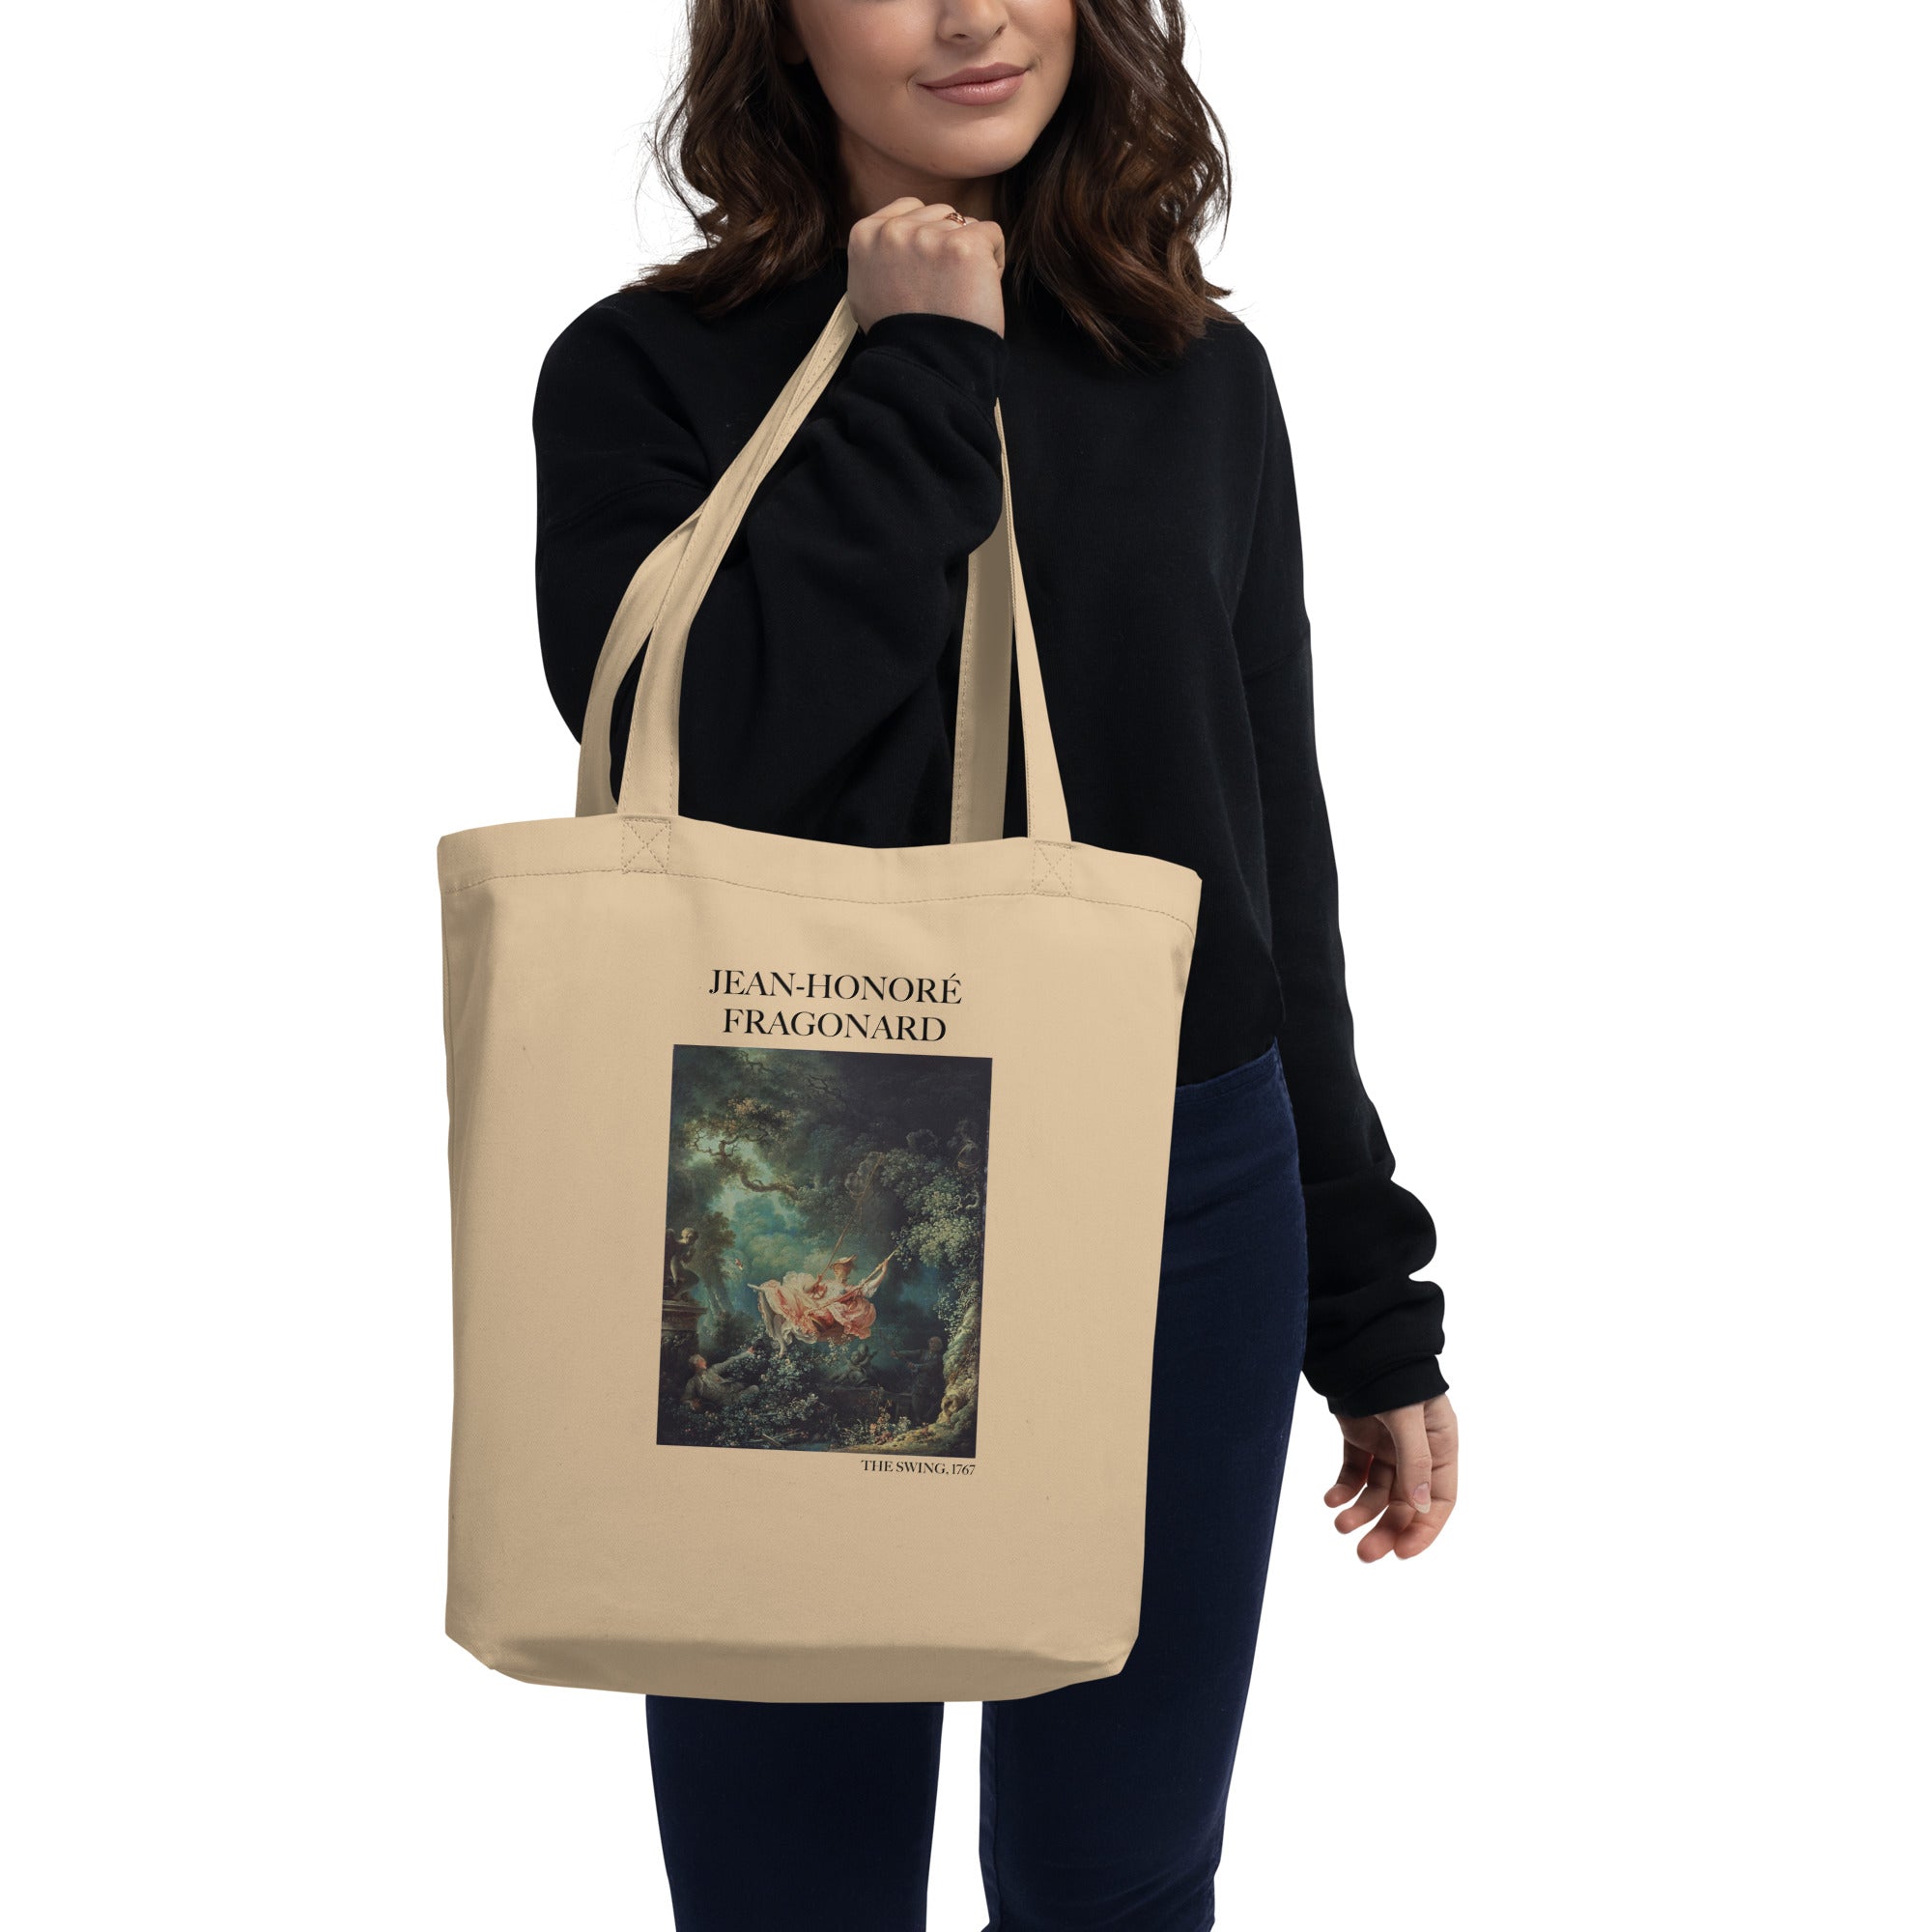 Jean-Honoré Fragonard 'The Swing' Famous Painting Totebag | Eco Friendly Art Tote Bag